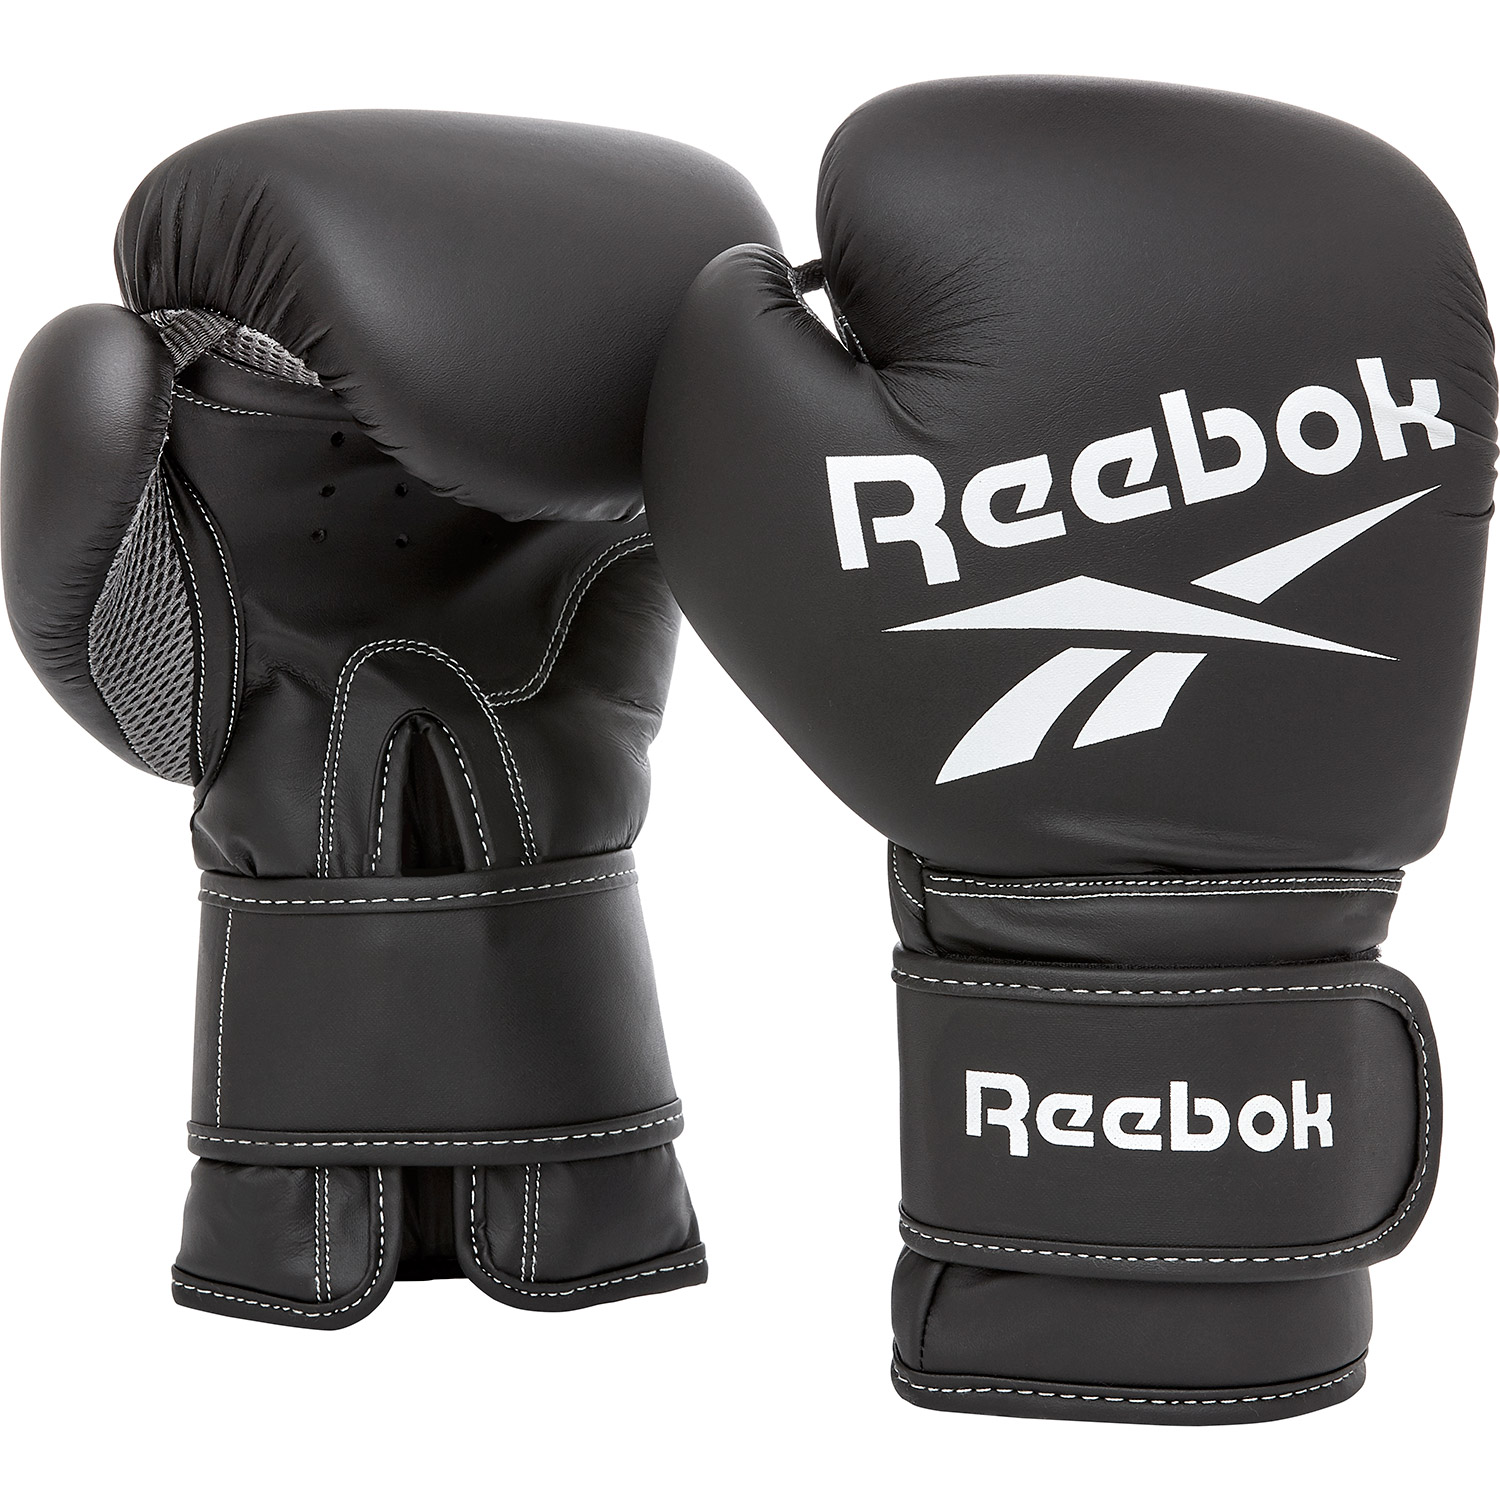 Reebok boxing gloves black 10 oz